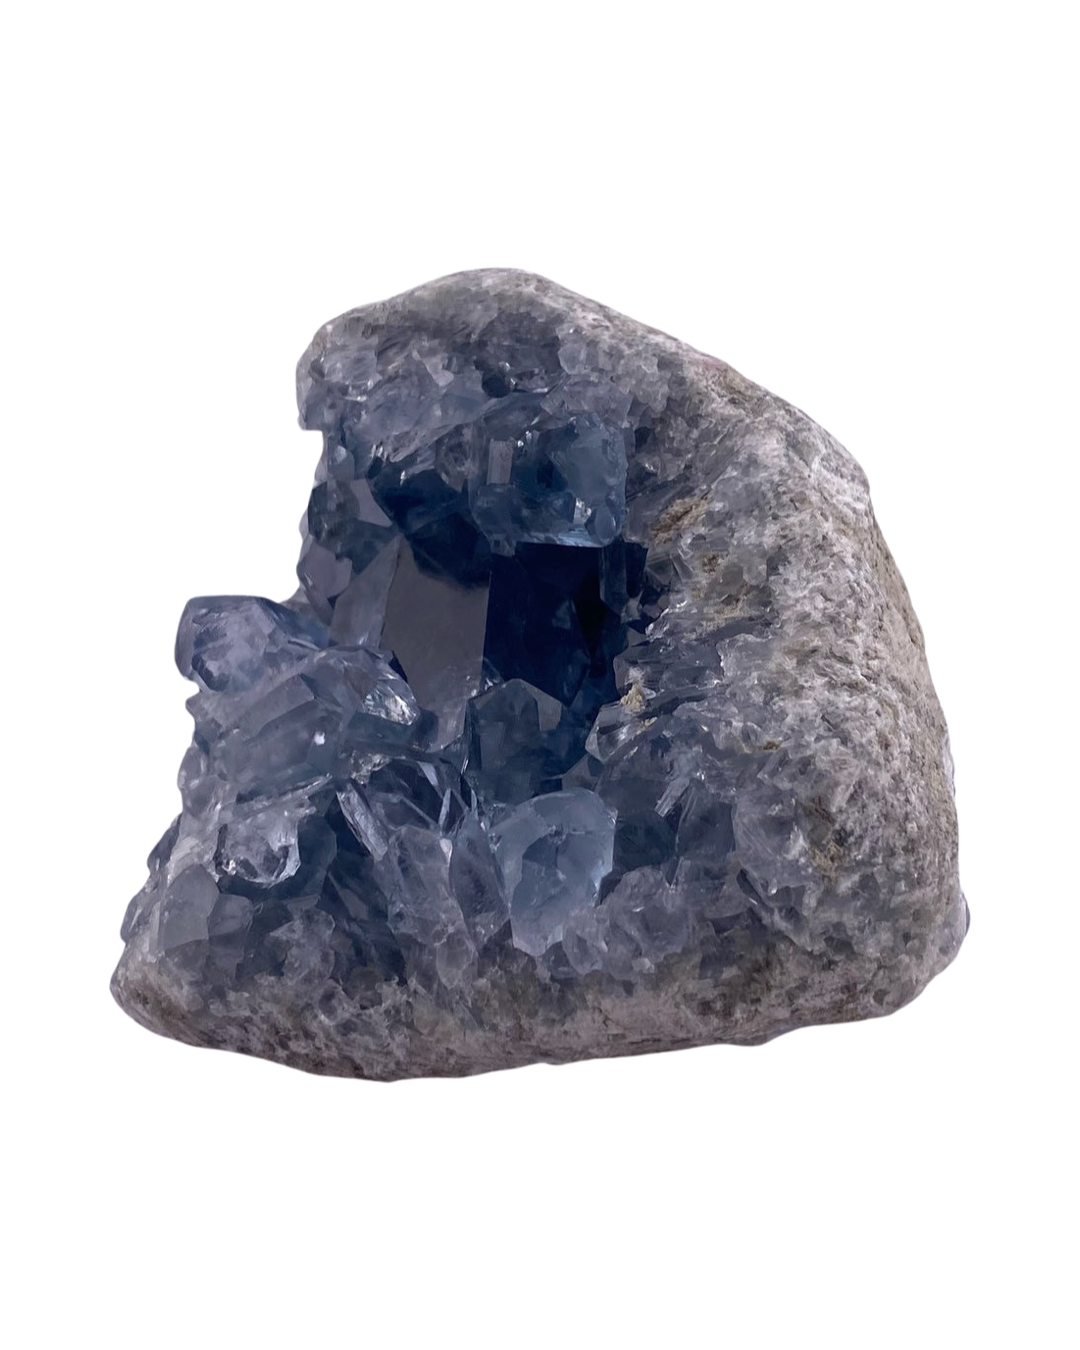 Celestite Geode (2lbs)